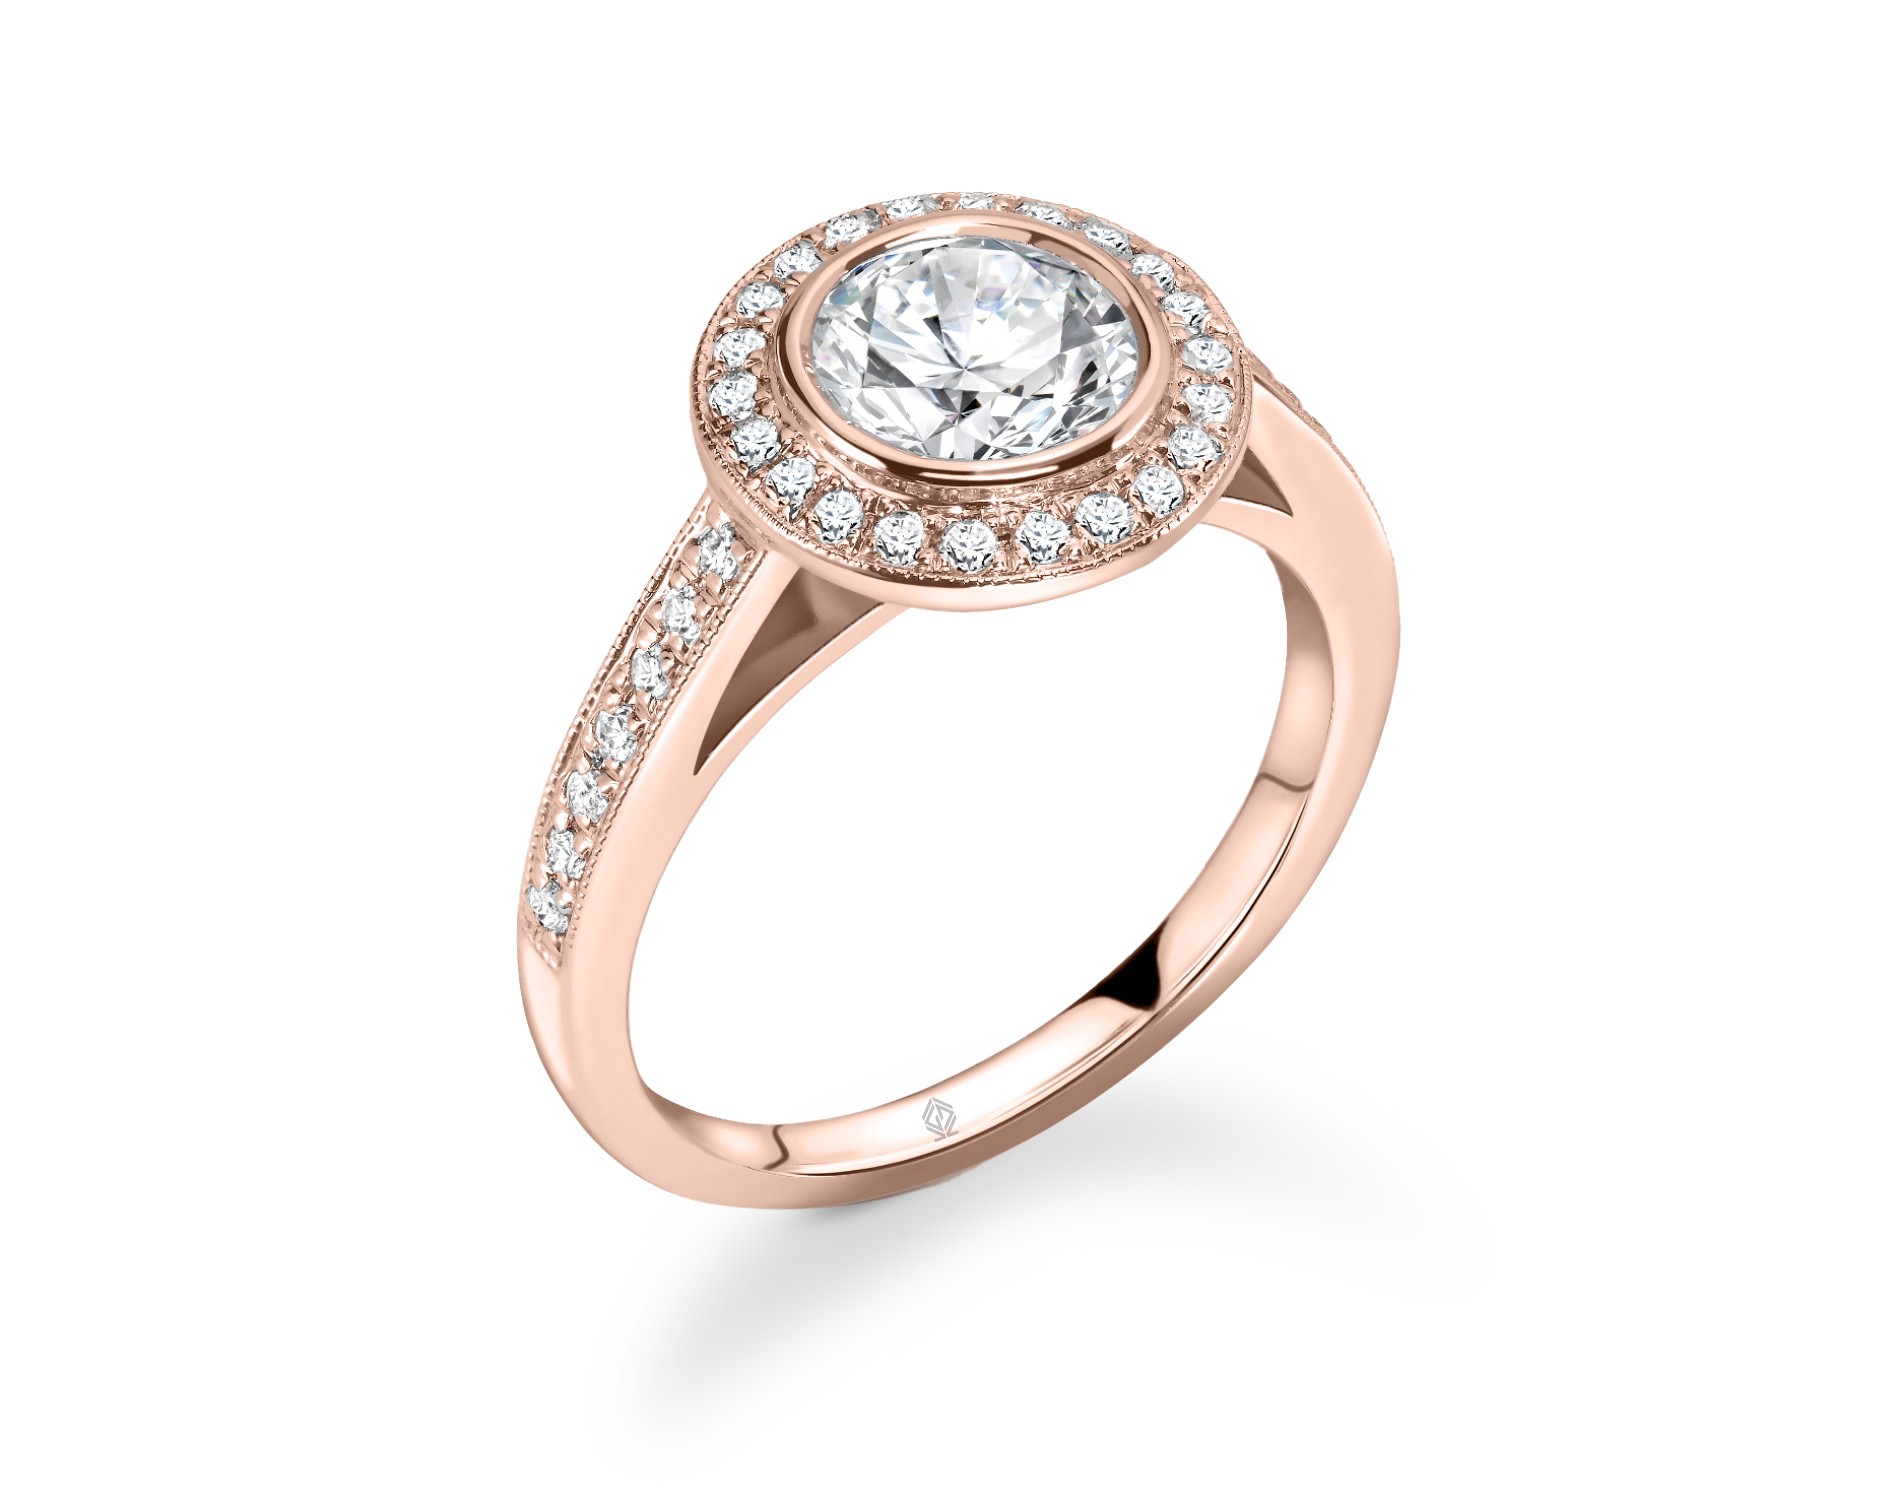 18K ROSE GOLD VINTAGE MILGRAIN ROUND DIAMOND RING WITH SIDE DIAMONDS CHANNEL SET